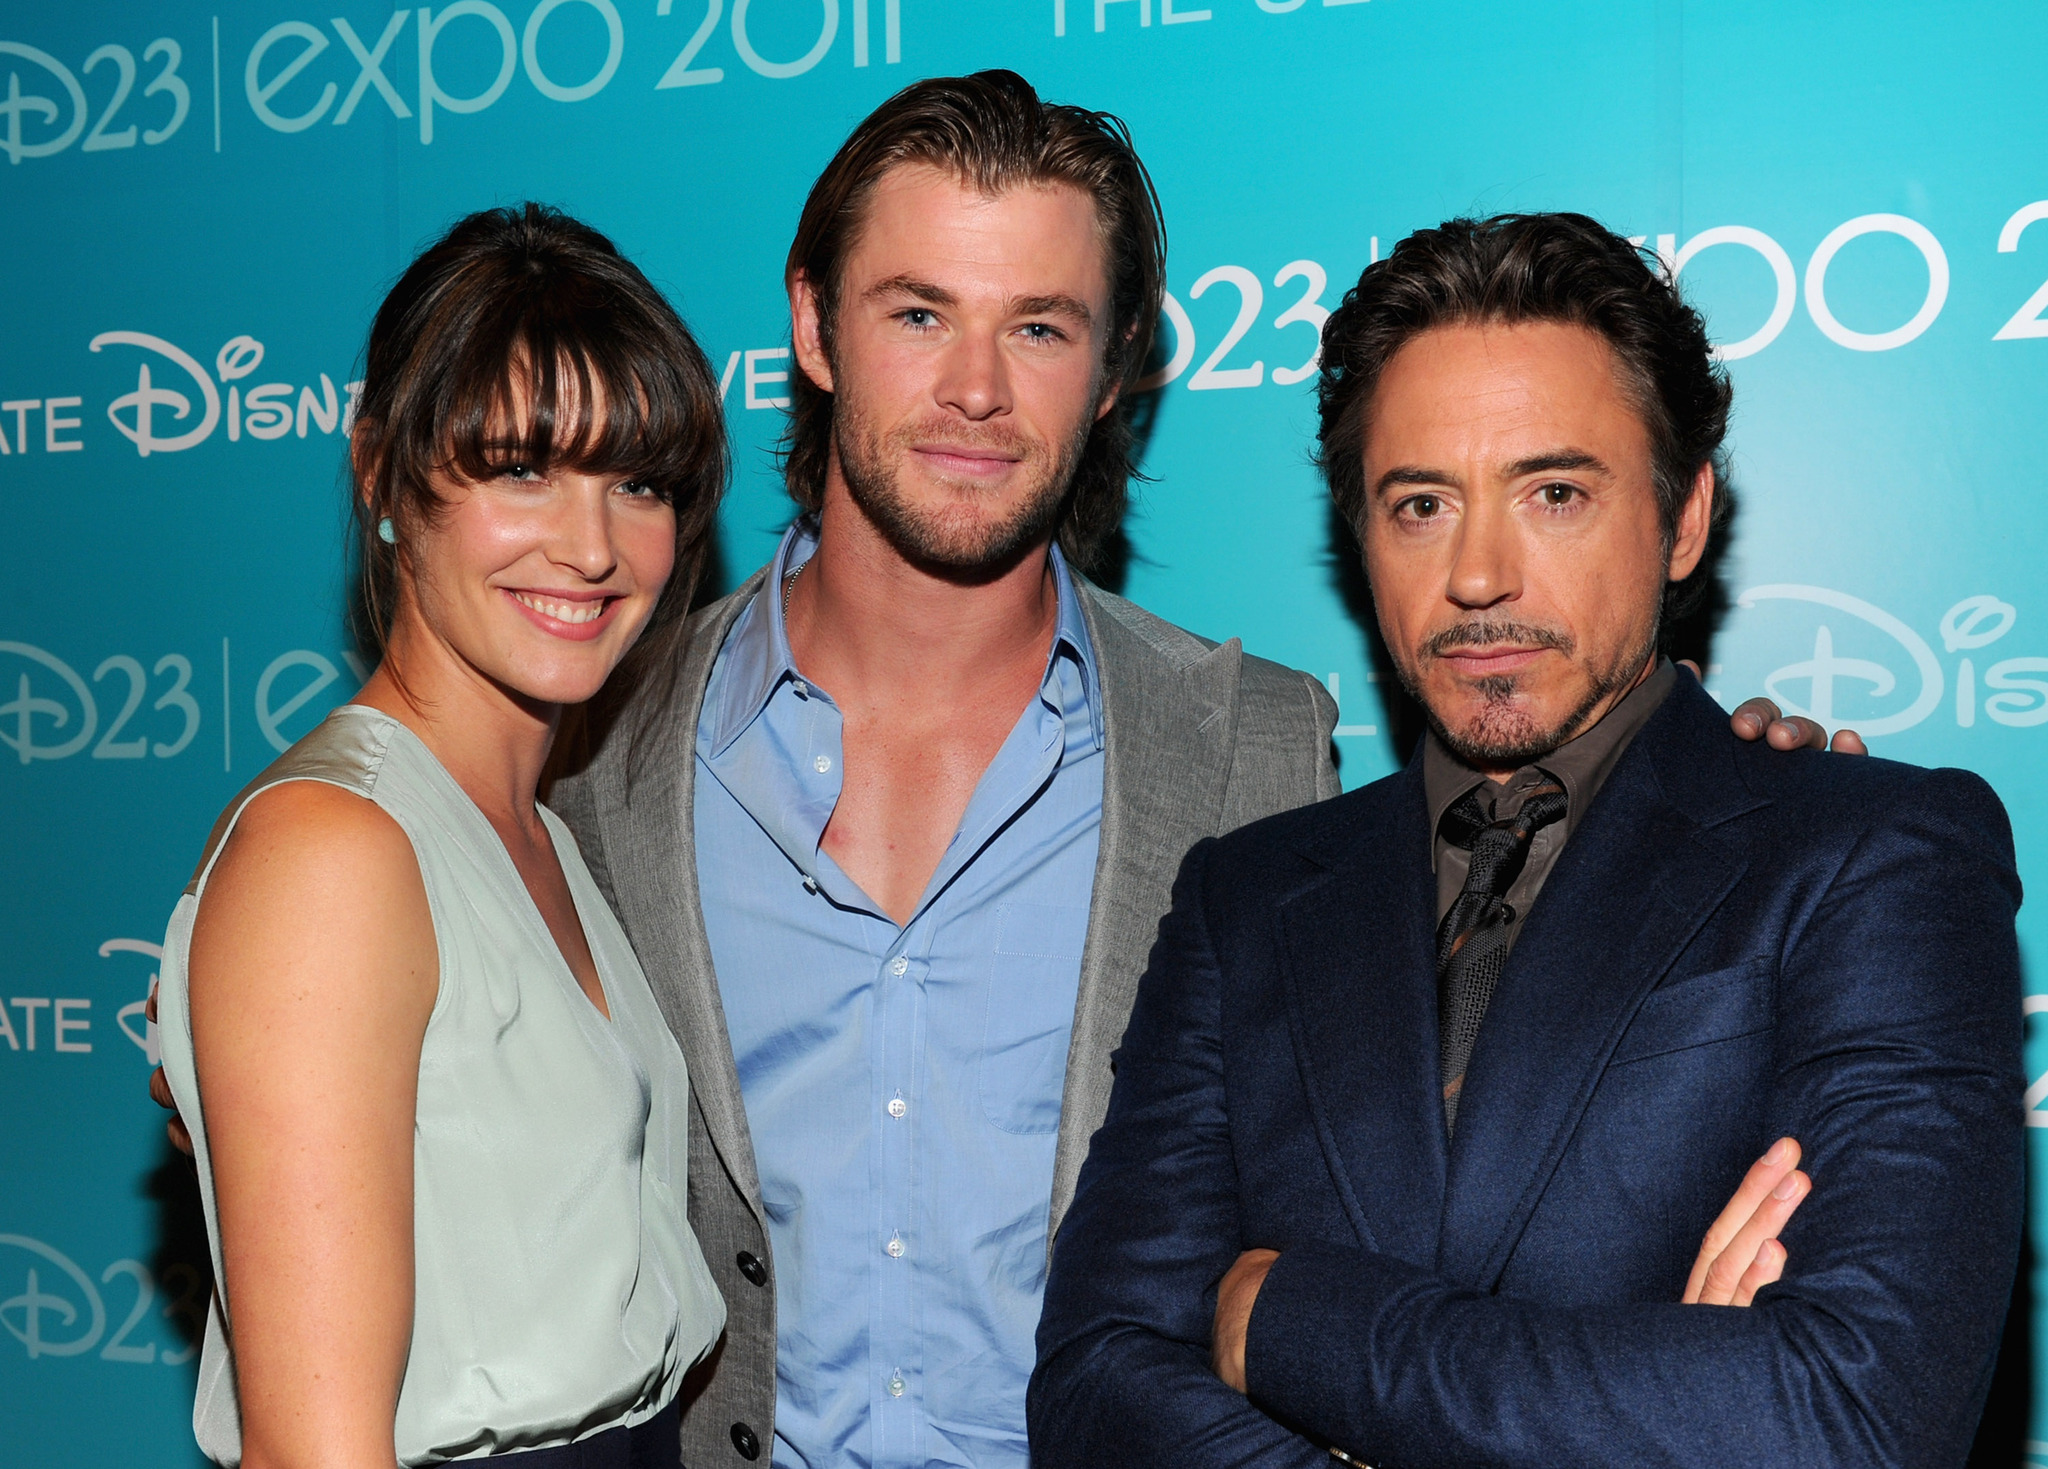 Robert Downey Jr., Cobie Smulders and Chris Hemsworth